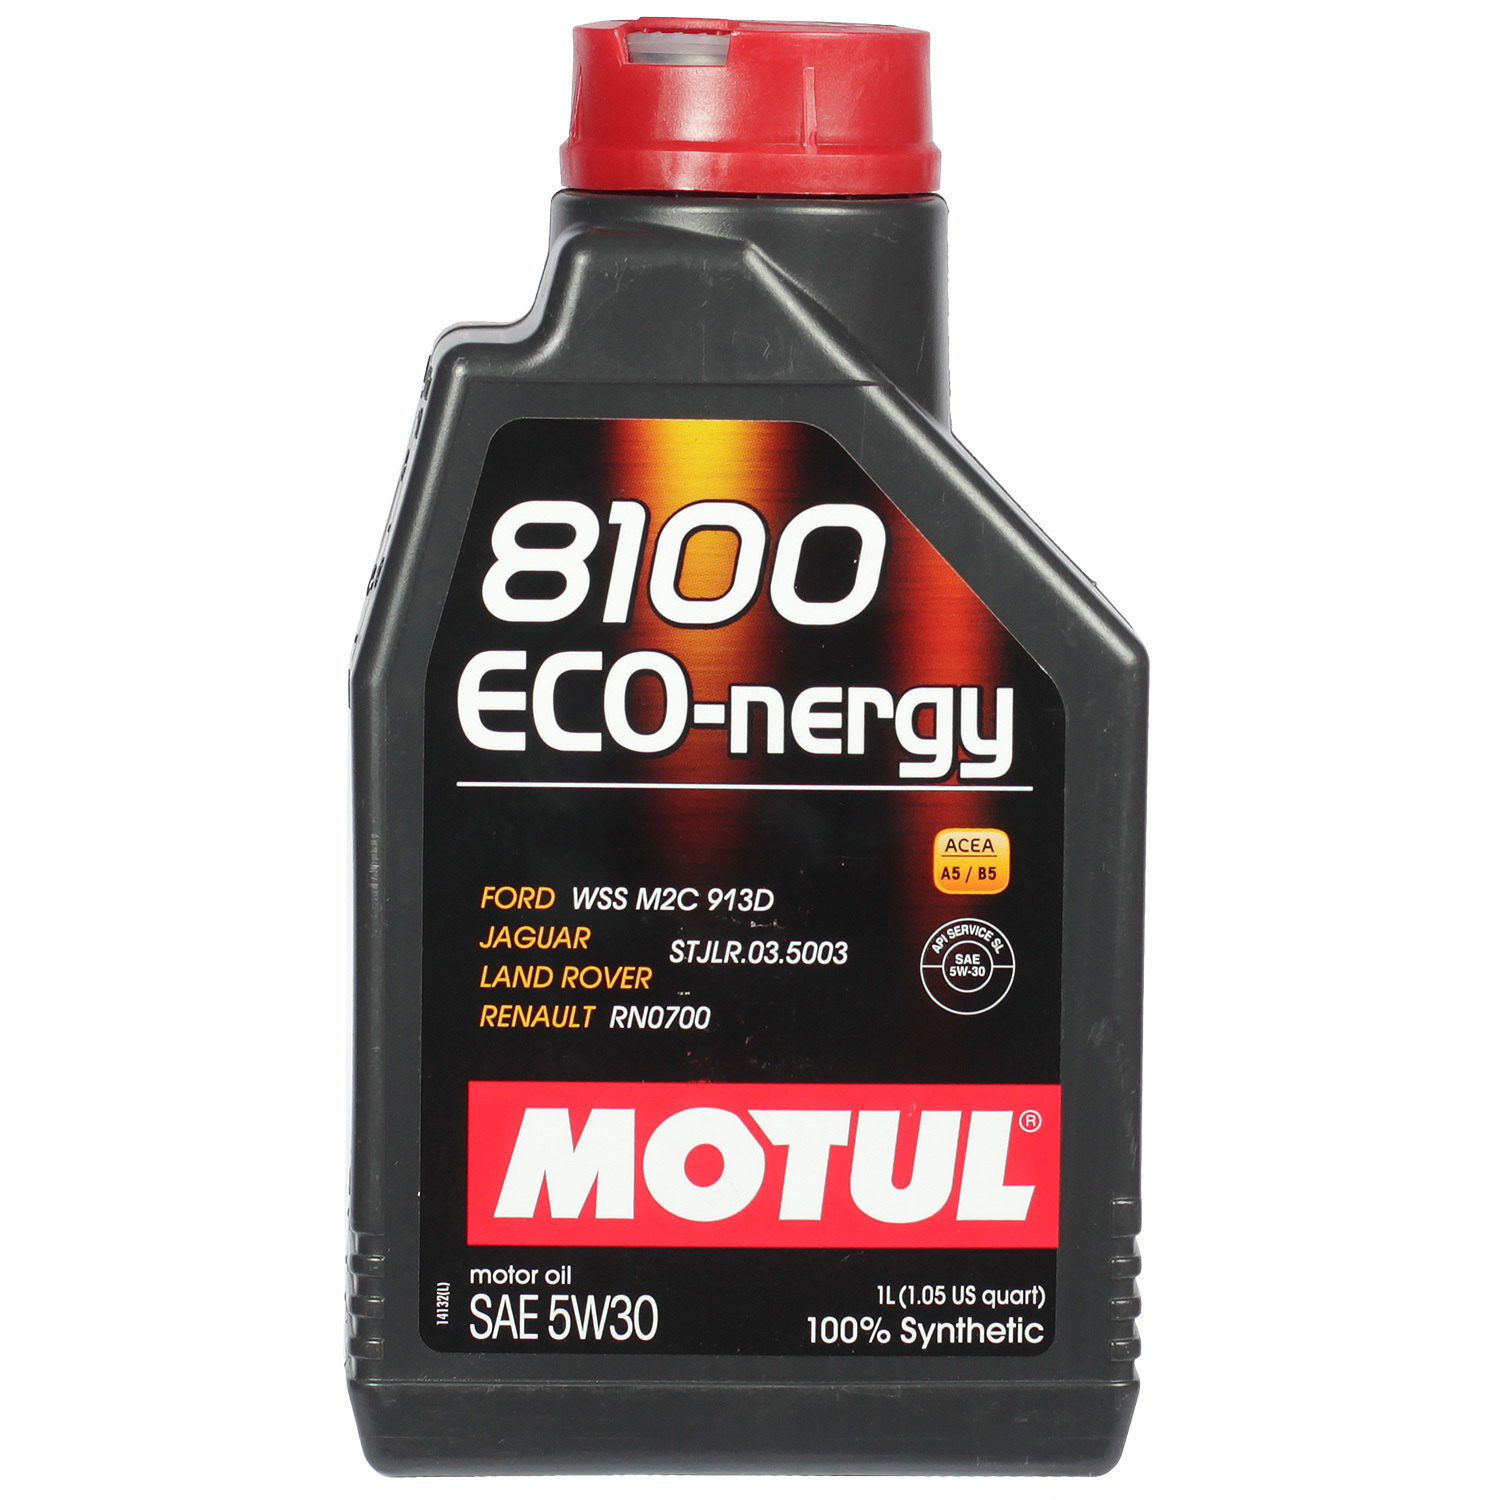 Motul Моторное масло Motul 8100 Eco-nergy 5W-30, 1 л motul моторное масло motul 6100 save nergy 5w 30 4 л